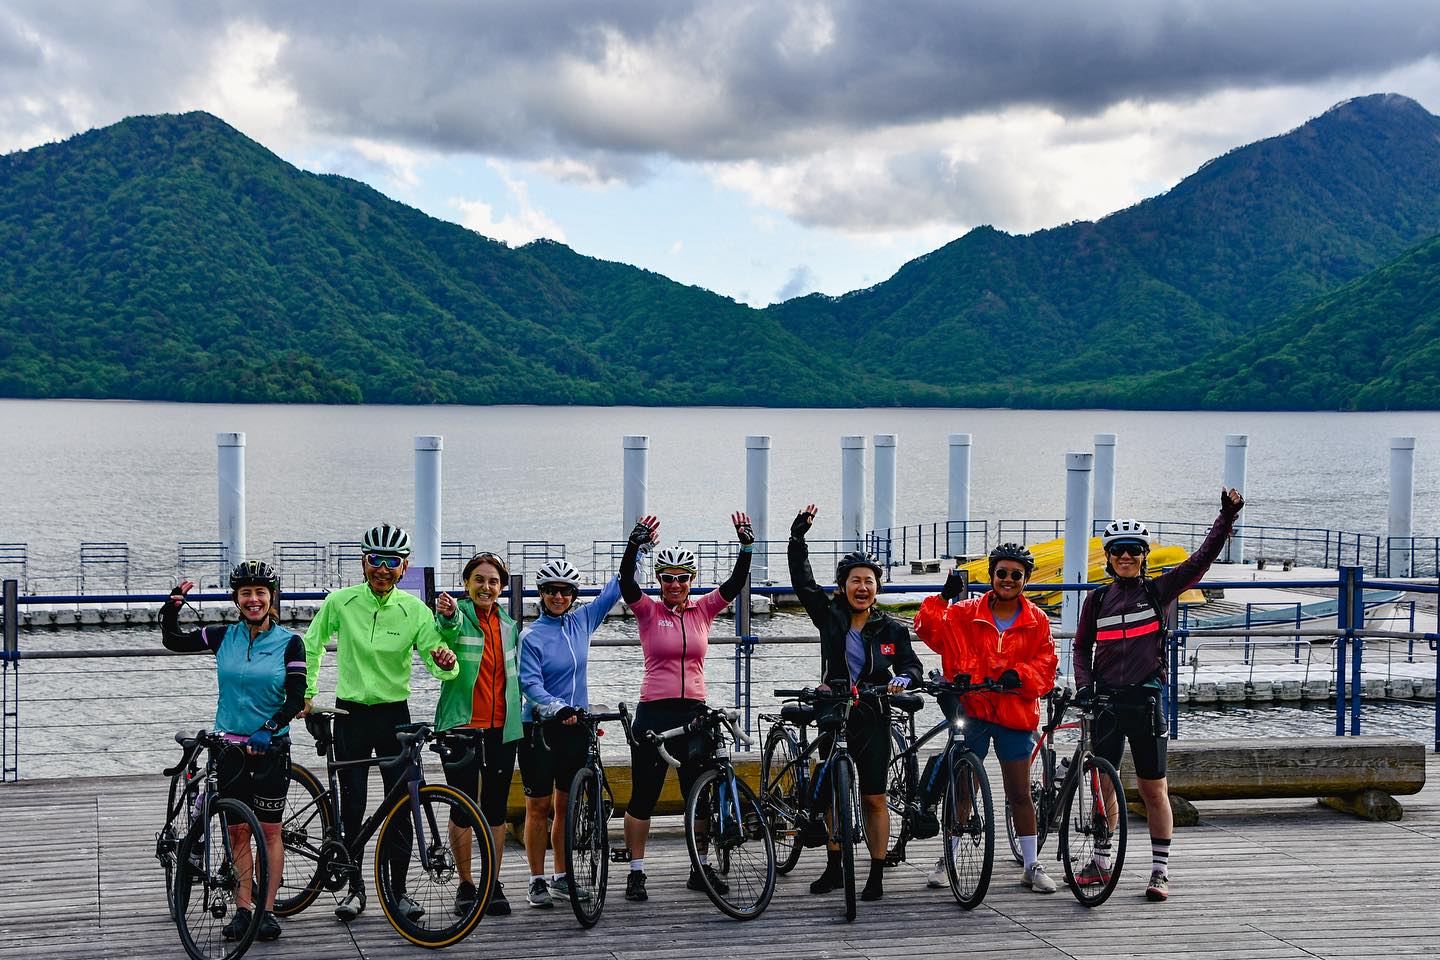 Biking the Irohazaka and beyond